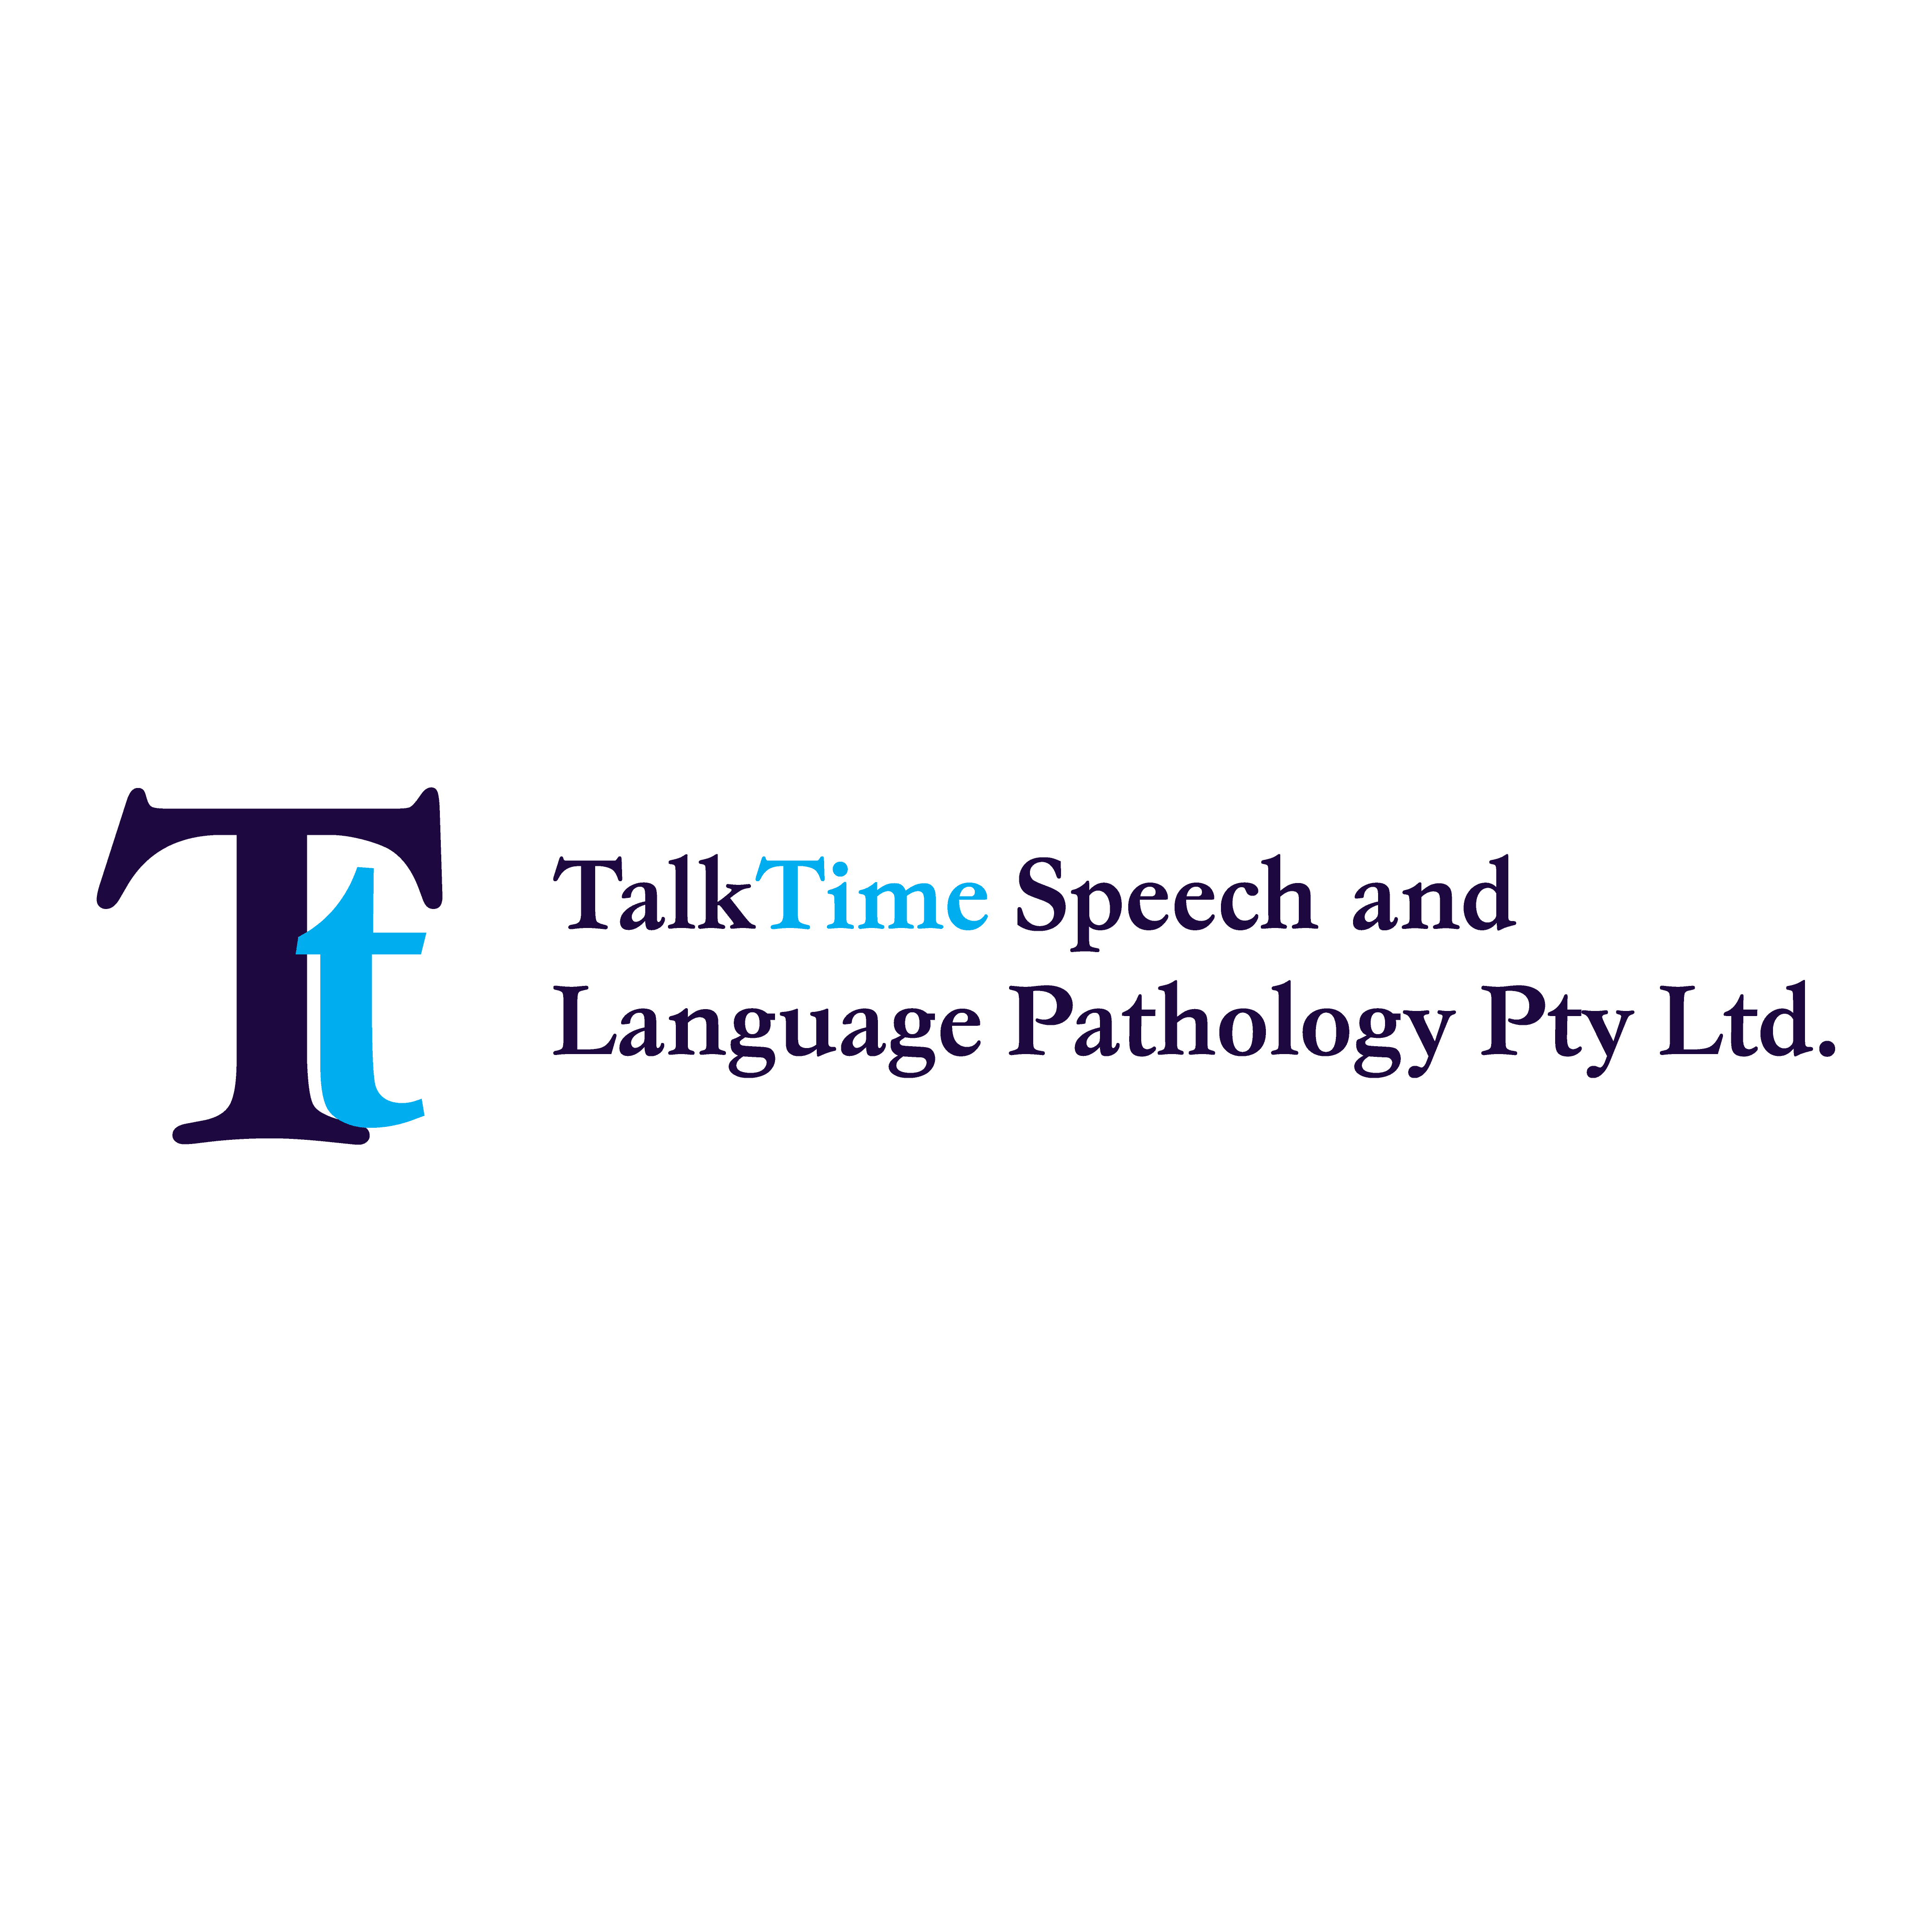 Talk Time Speech and Language Pathology